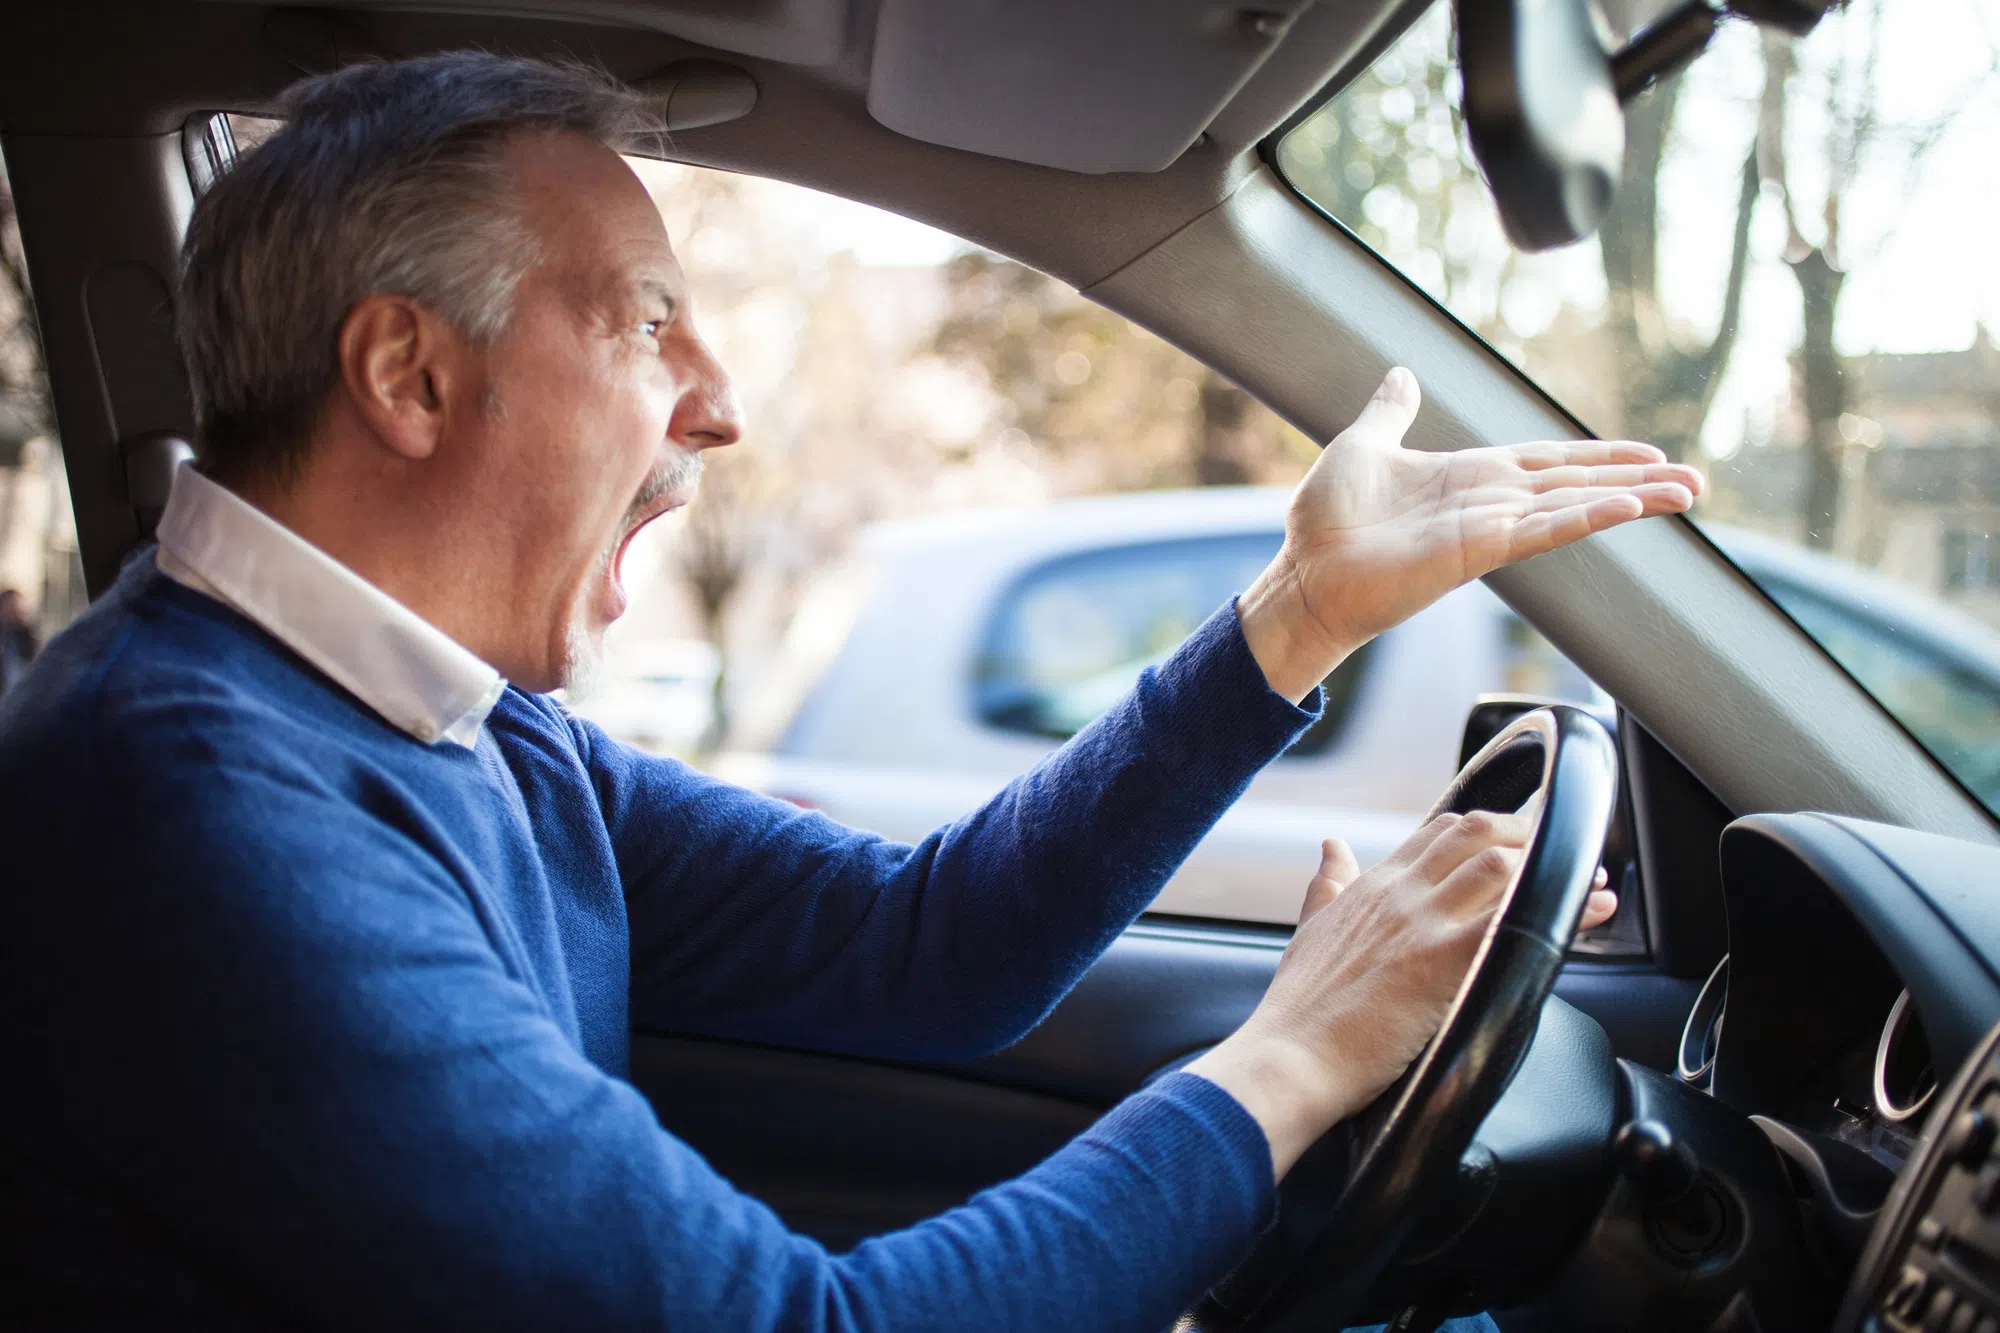 Top 10 Most Common Road Rage Behaviors